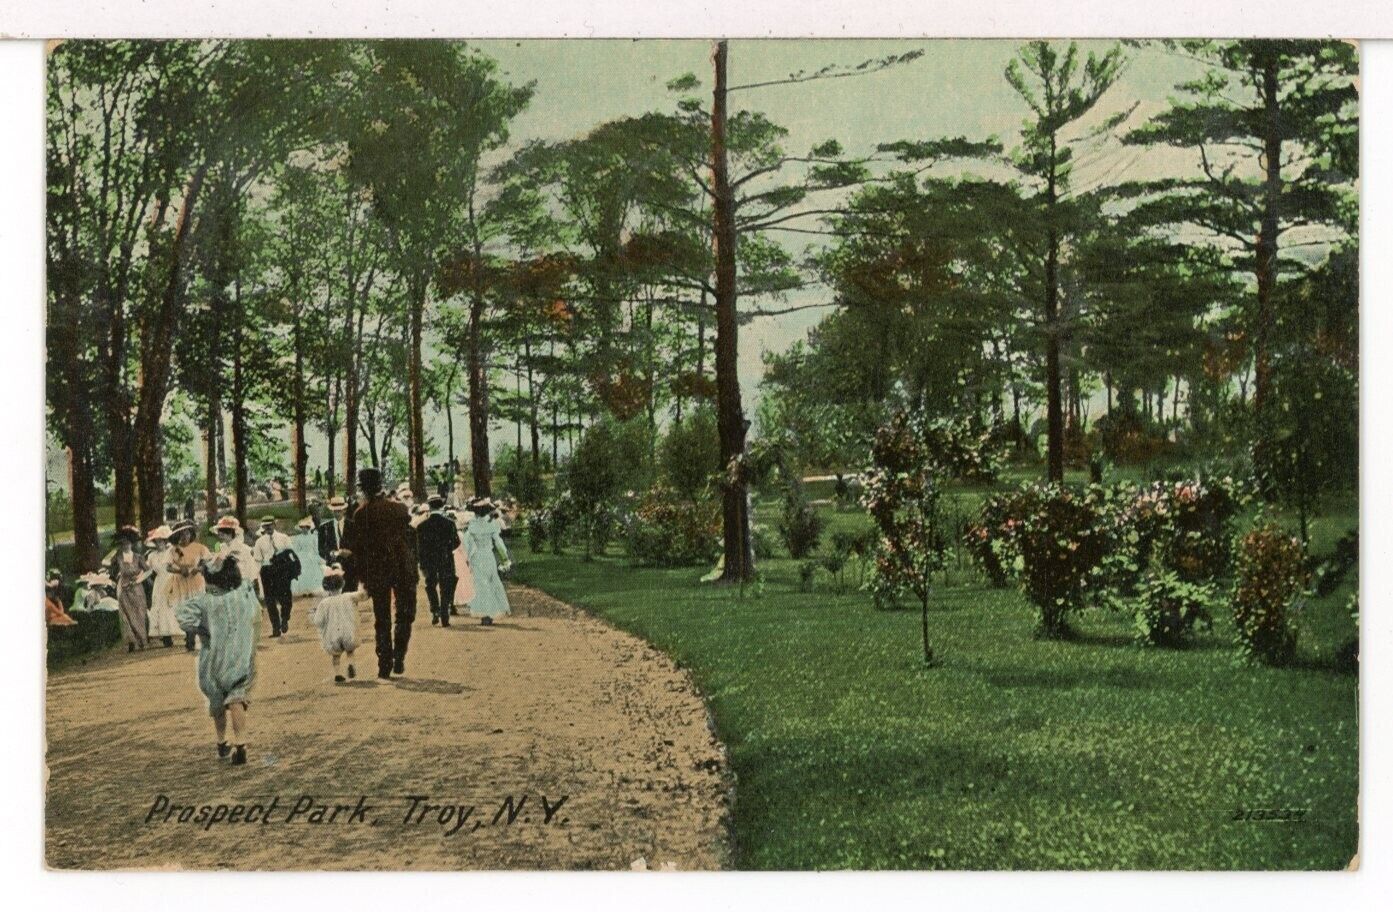 1911 - PROSPECT PARK, Troy, New York, a Leighton & Valentine Postcard